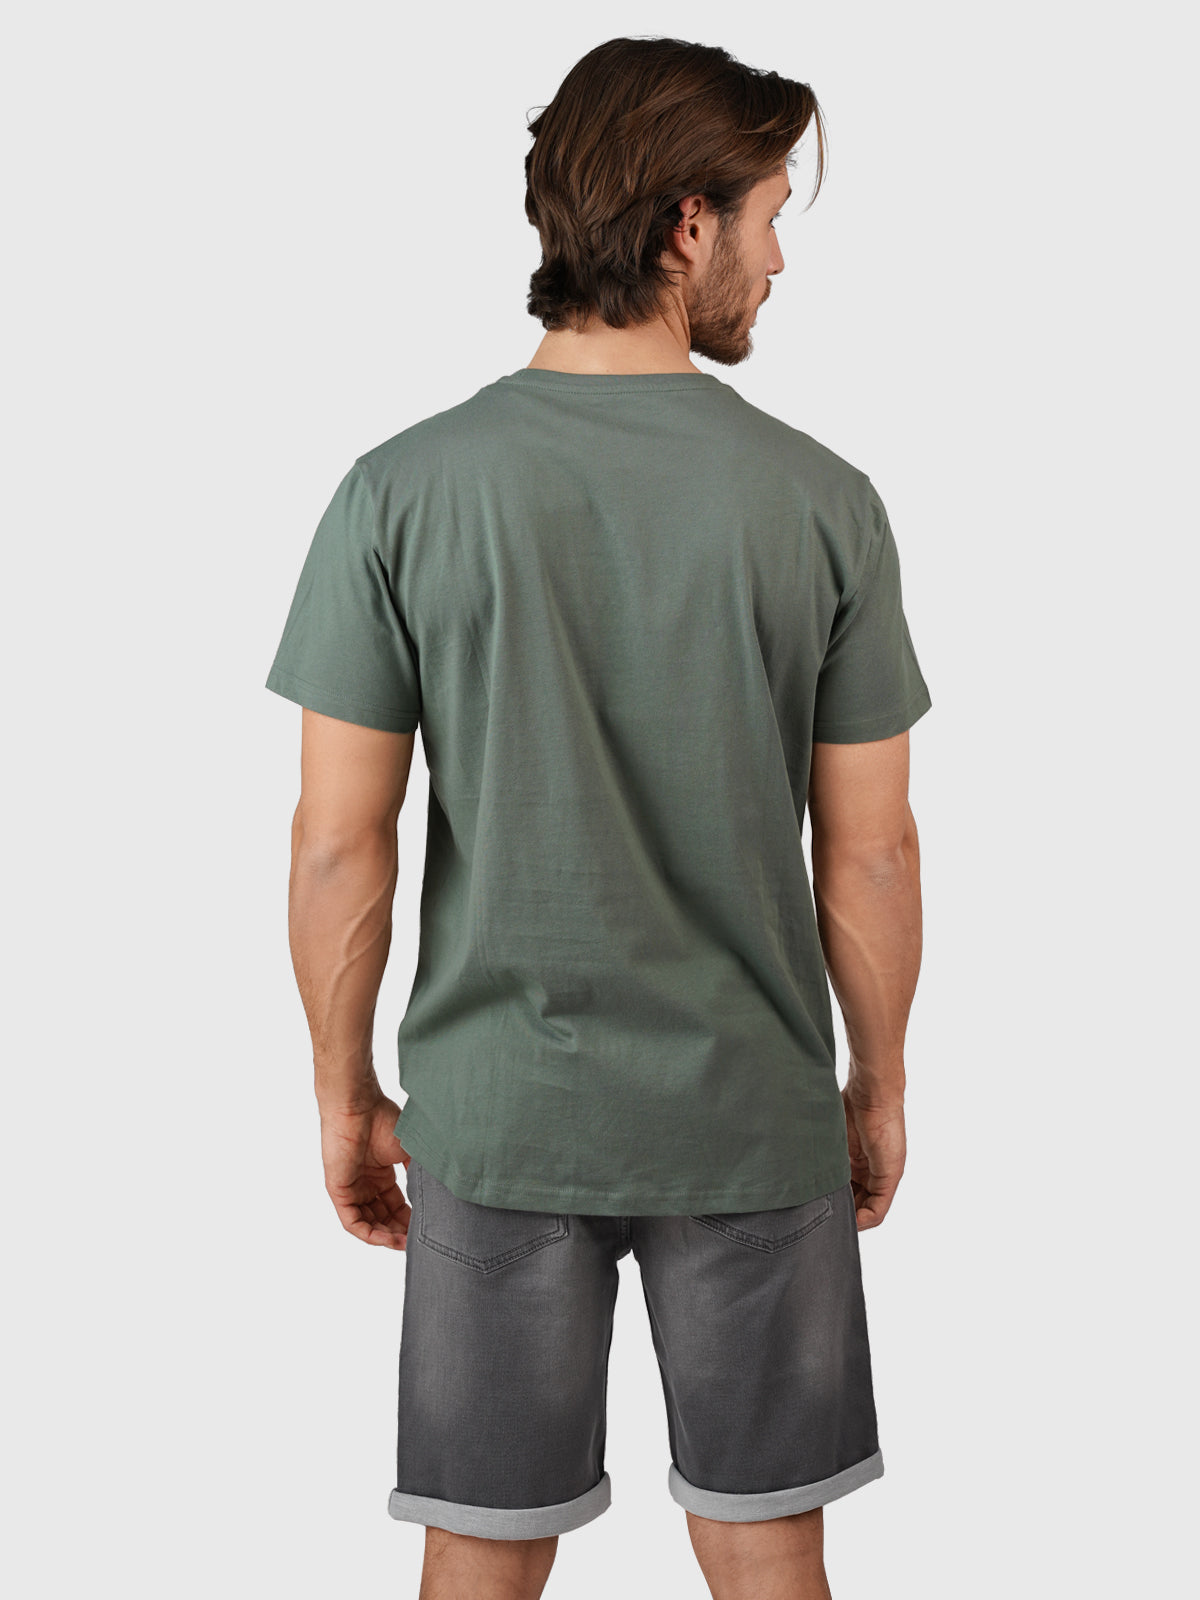 Leeway Herren T-shirt | Grün